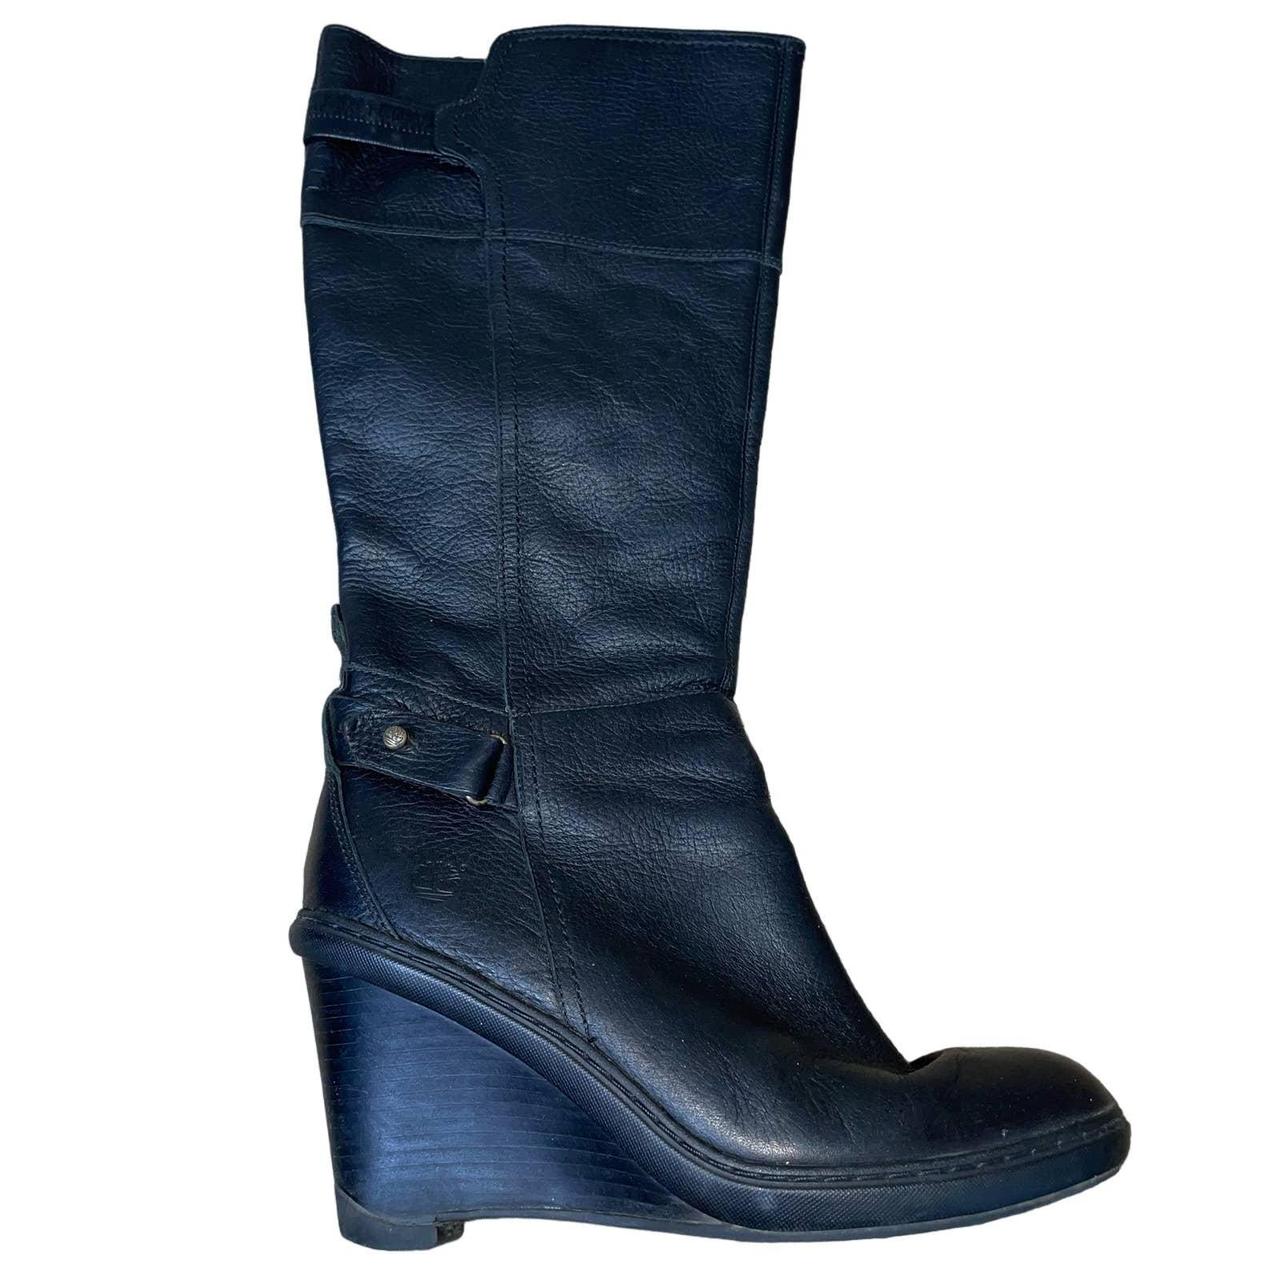 TIMBERLAND Black Wedge Heel Leather Boots Excellent... - Depop